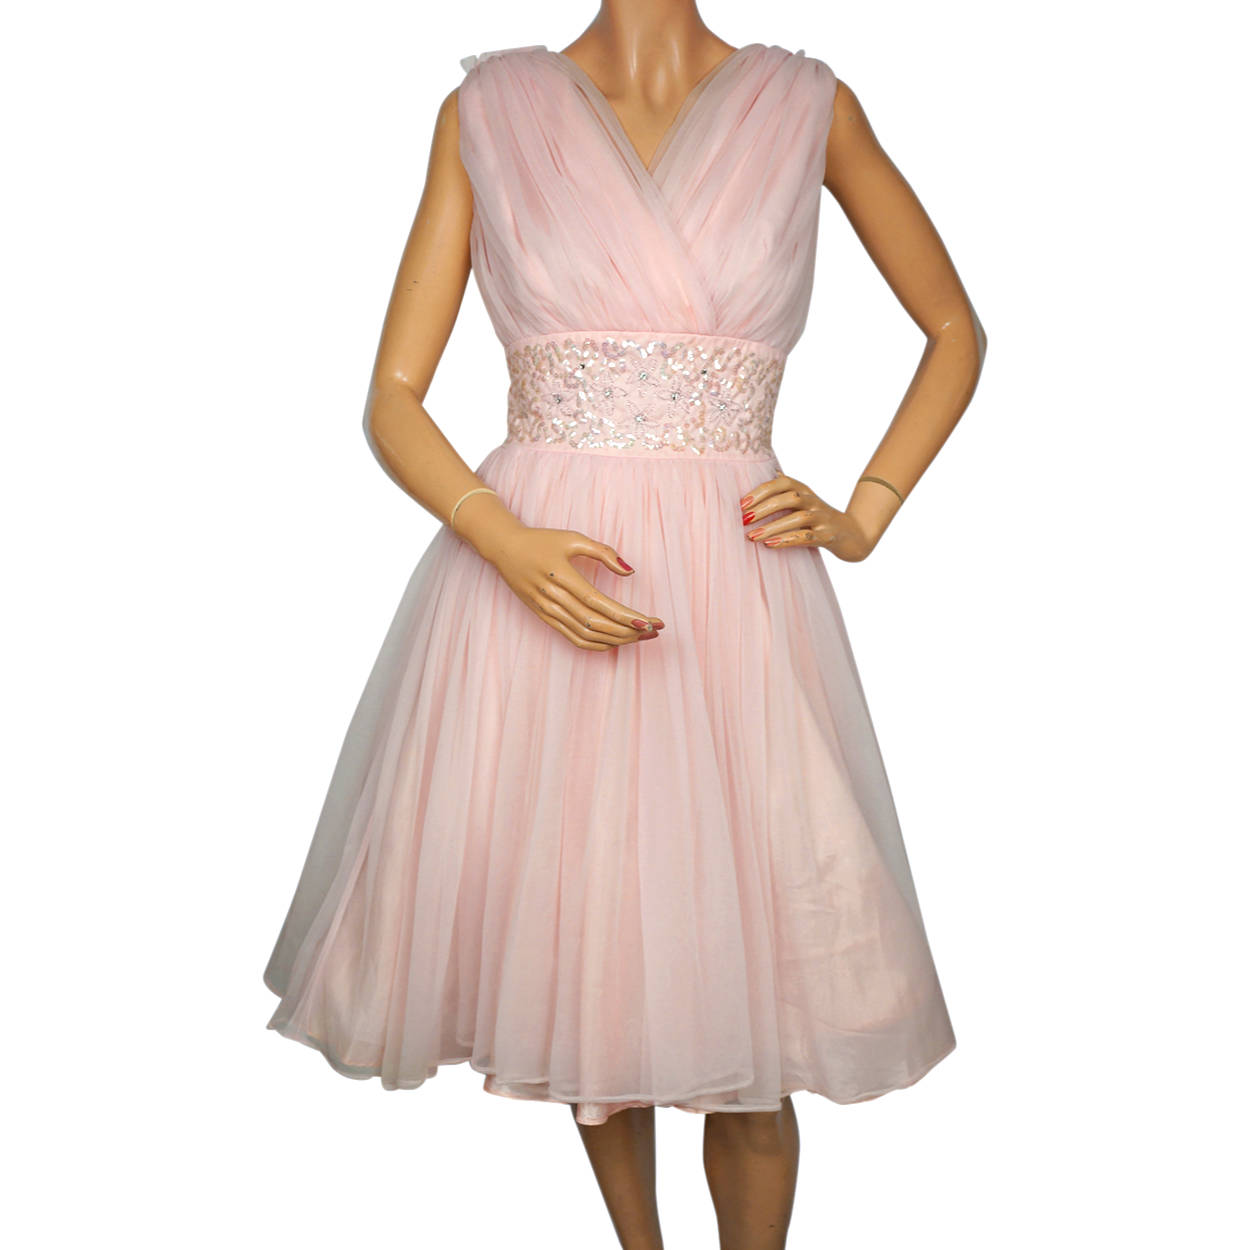 pink 1950s dress